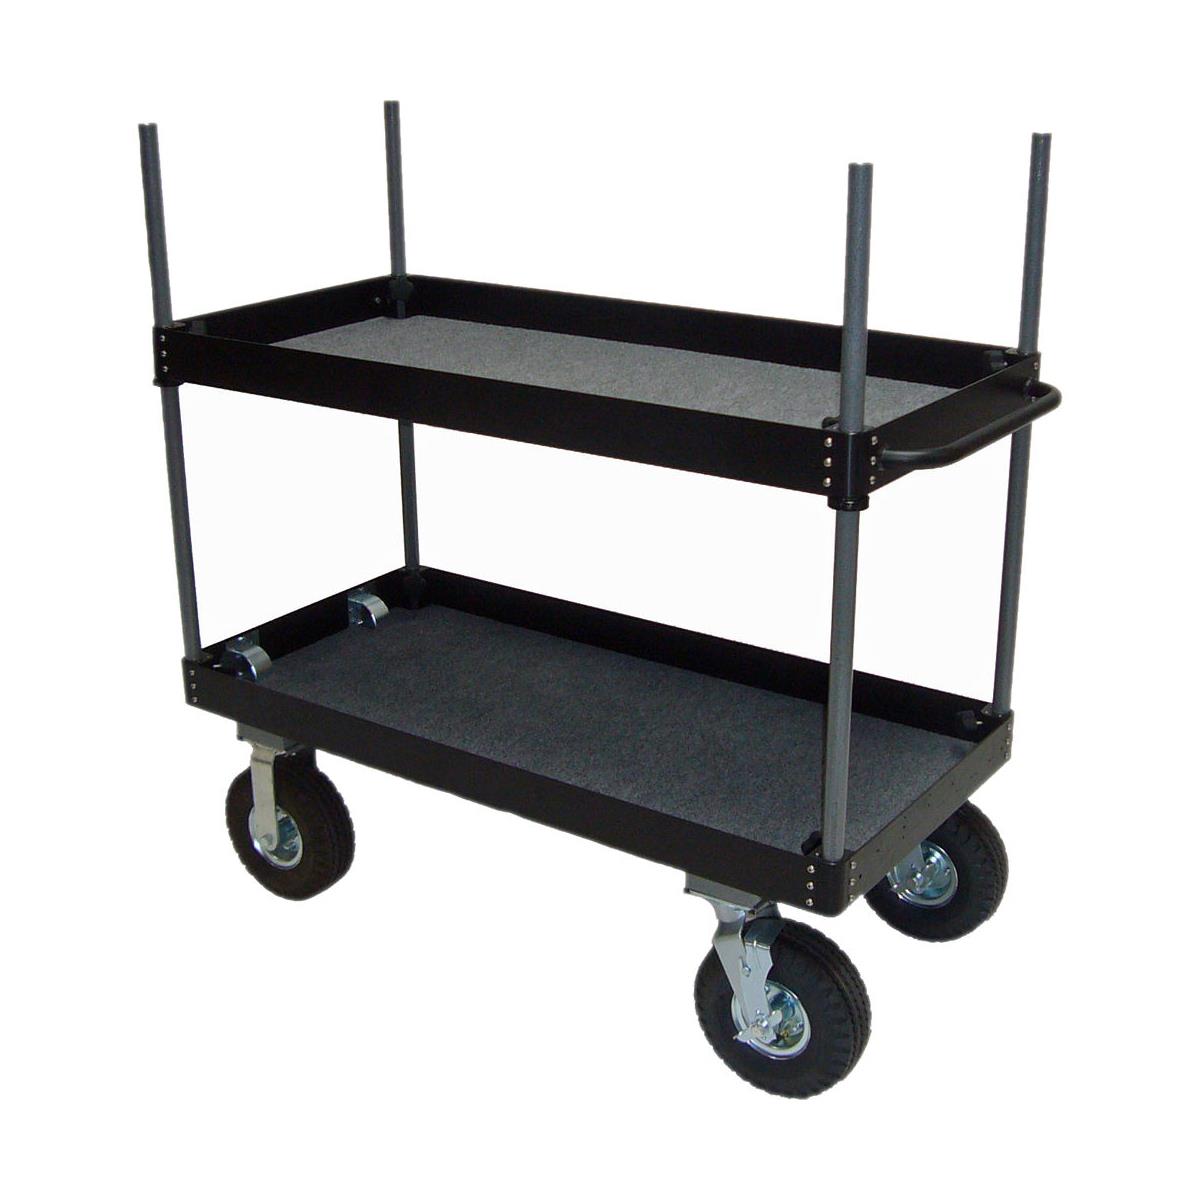 Image of Backstage Aluminum Camera Case Cart with Wheels